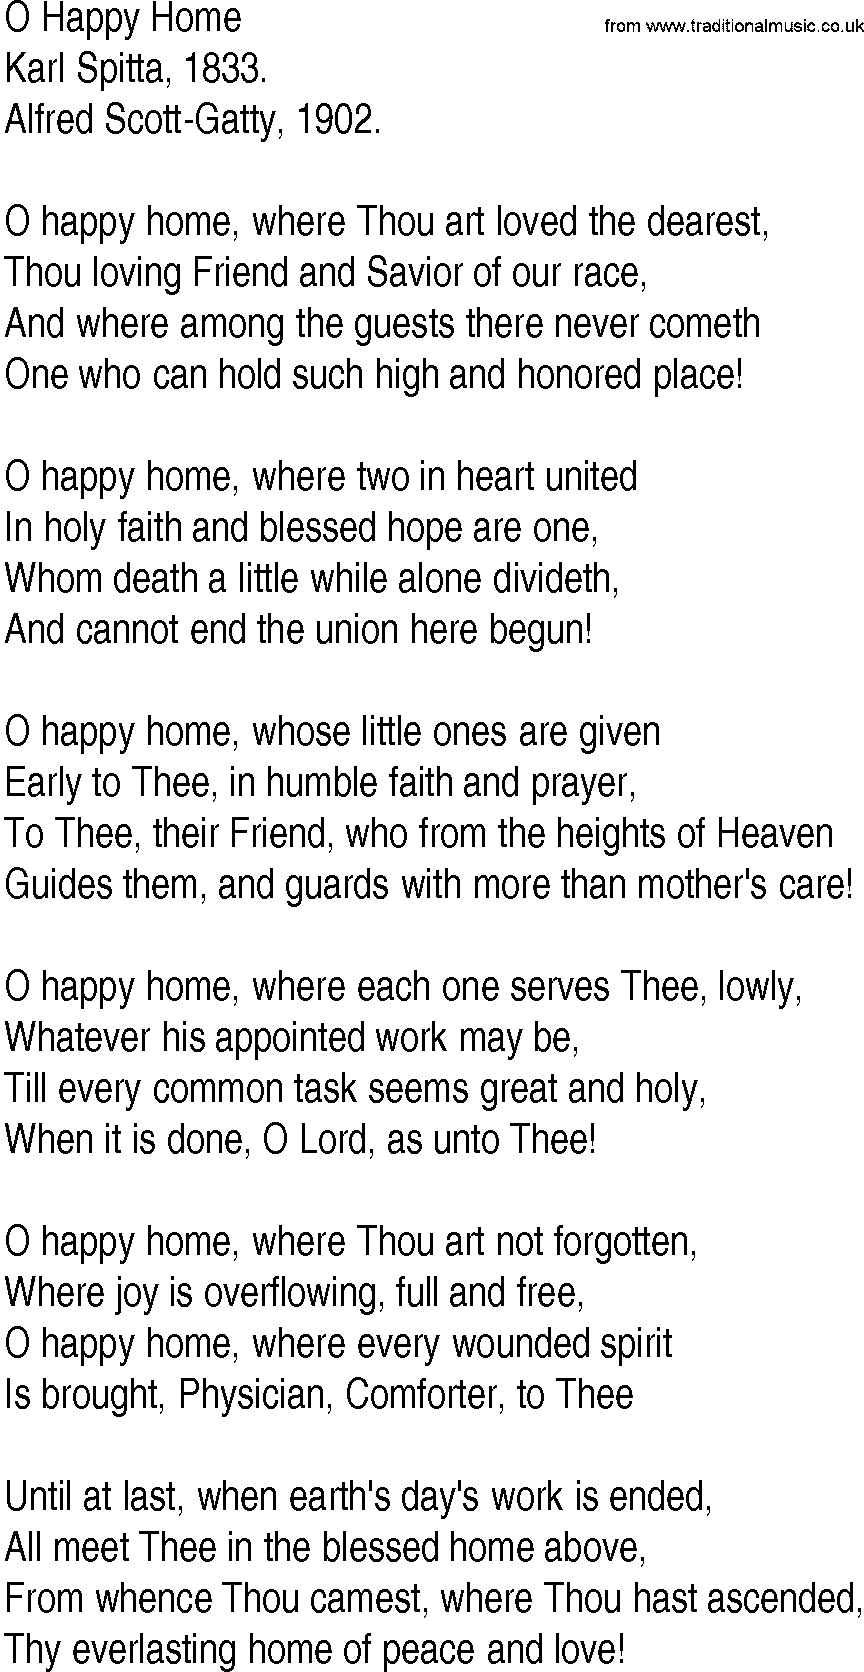 Hymn and Gospel Song: O Happy Home by Karl Spitta lyrics